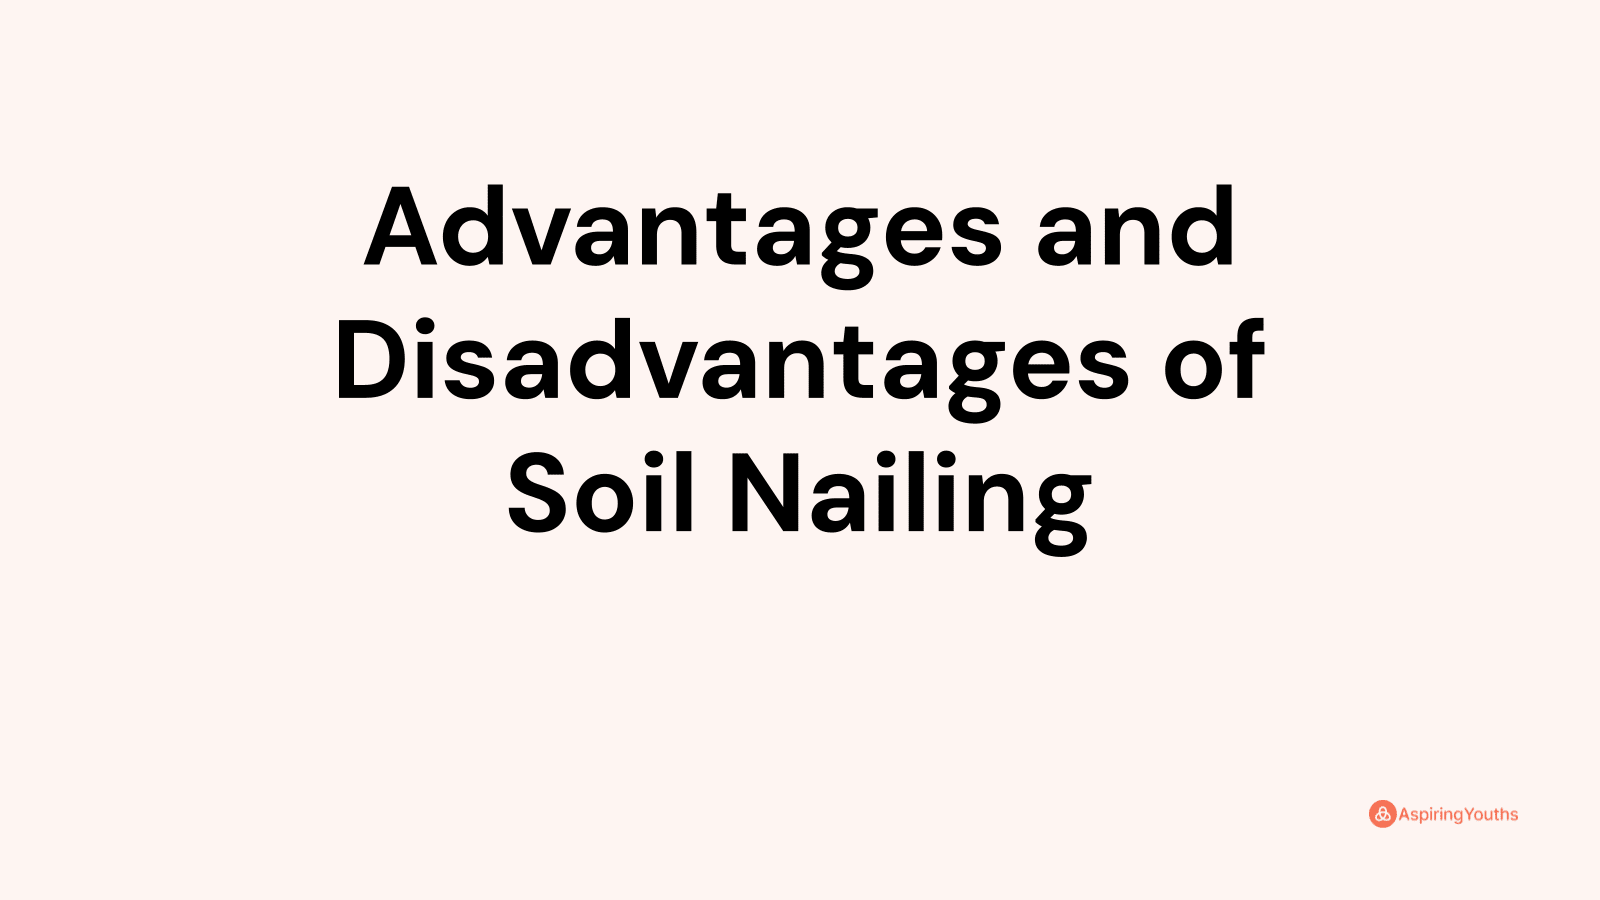 Advantages and disadvantages of Soil Nailing